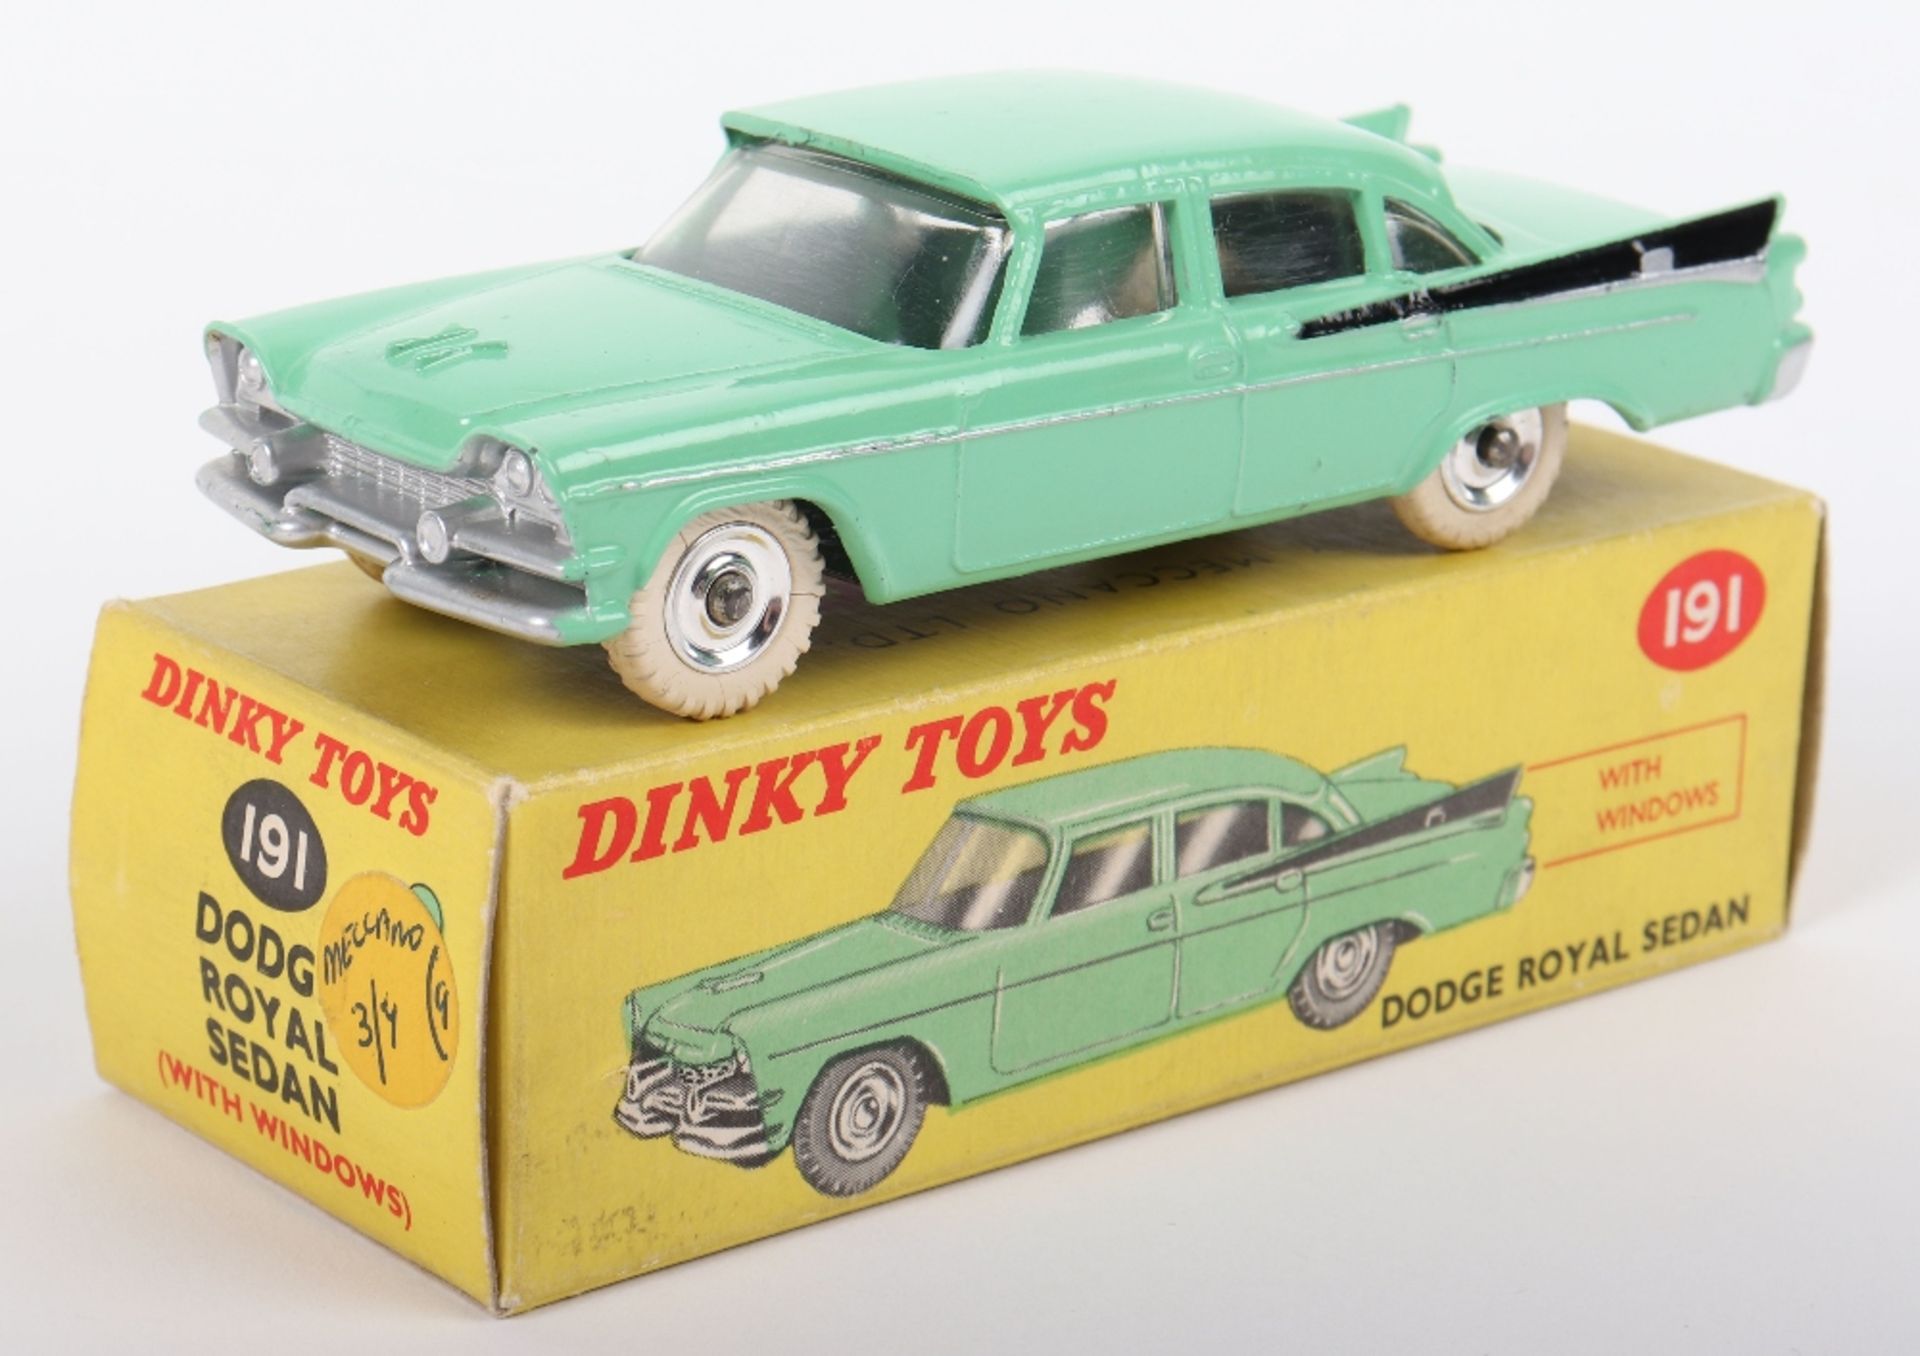 Dinky Toys 191 Dodge Royal Sedan